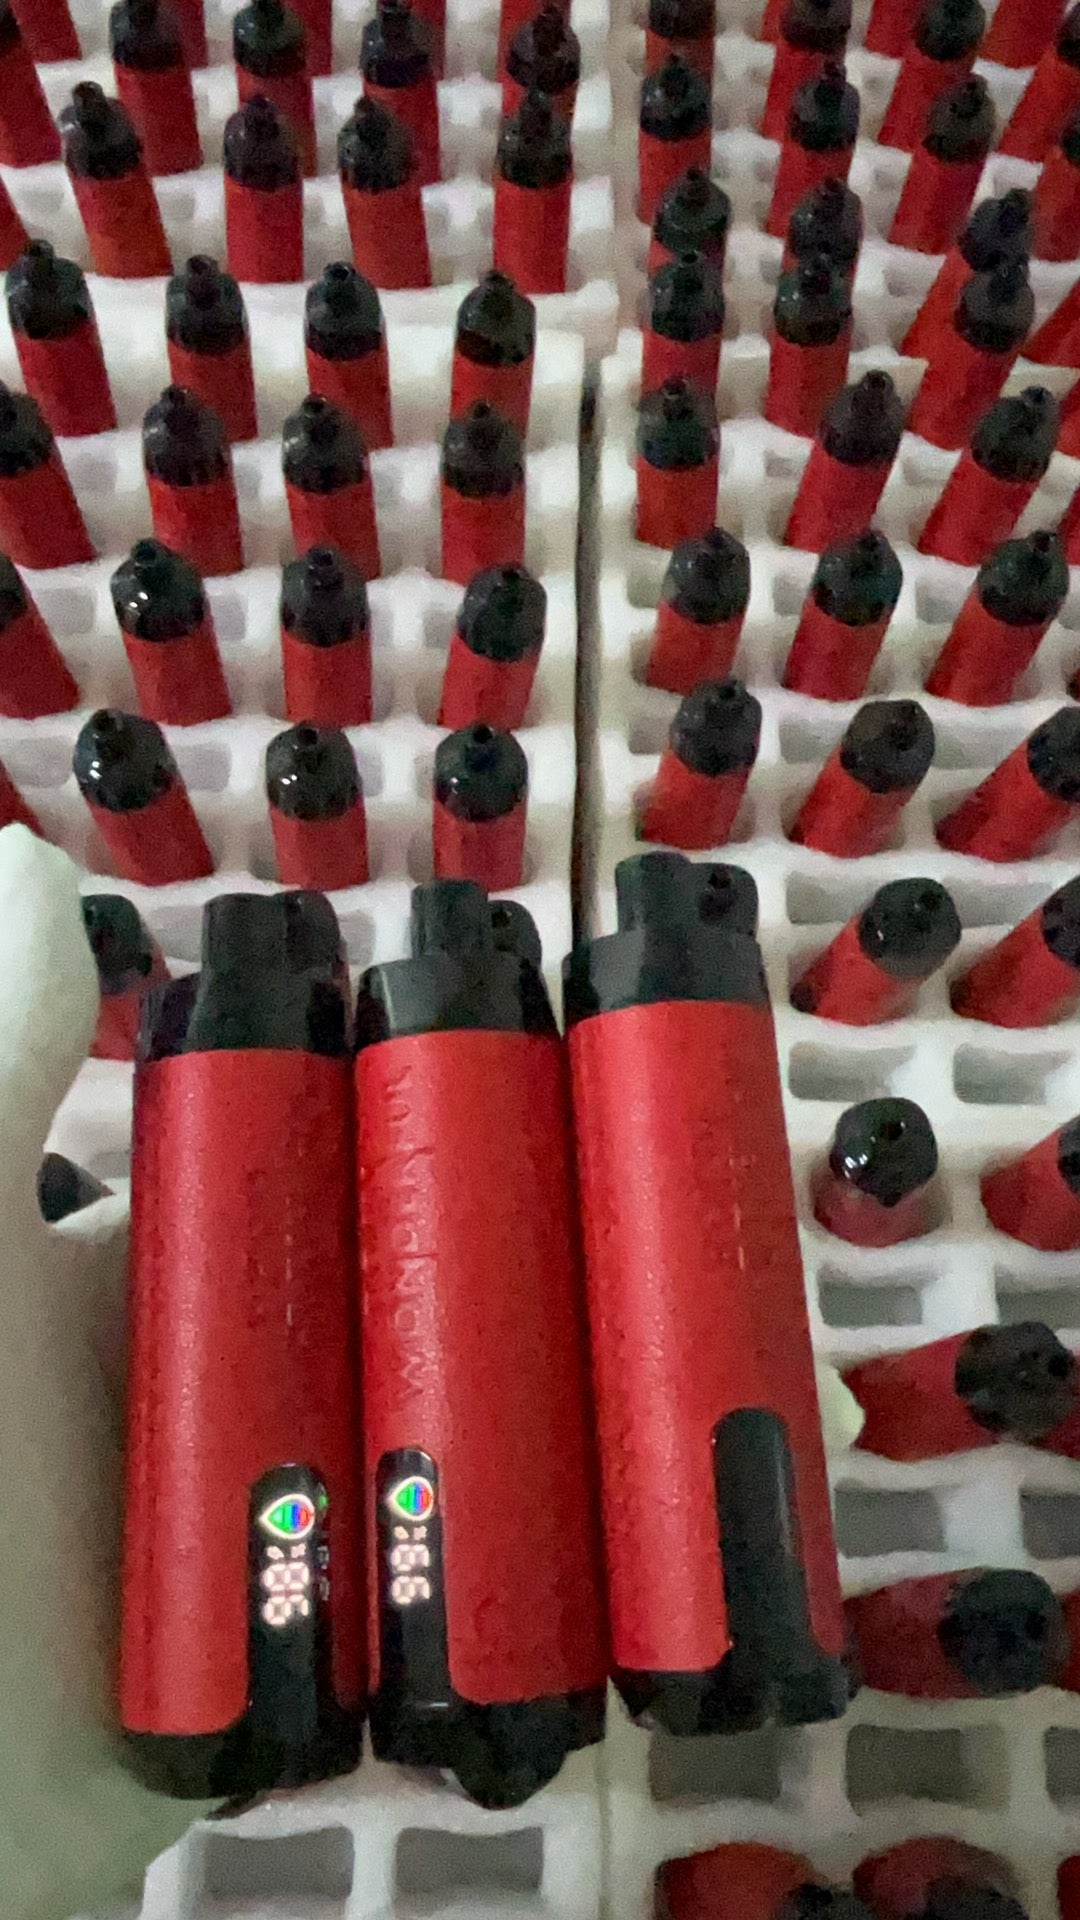 RandM Shisha 10000Puffs Disposable Vape Wholesale - Vapz Vape Wholesale